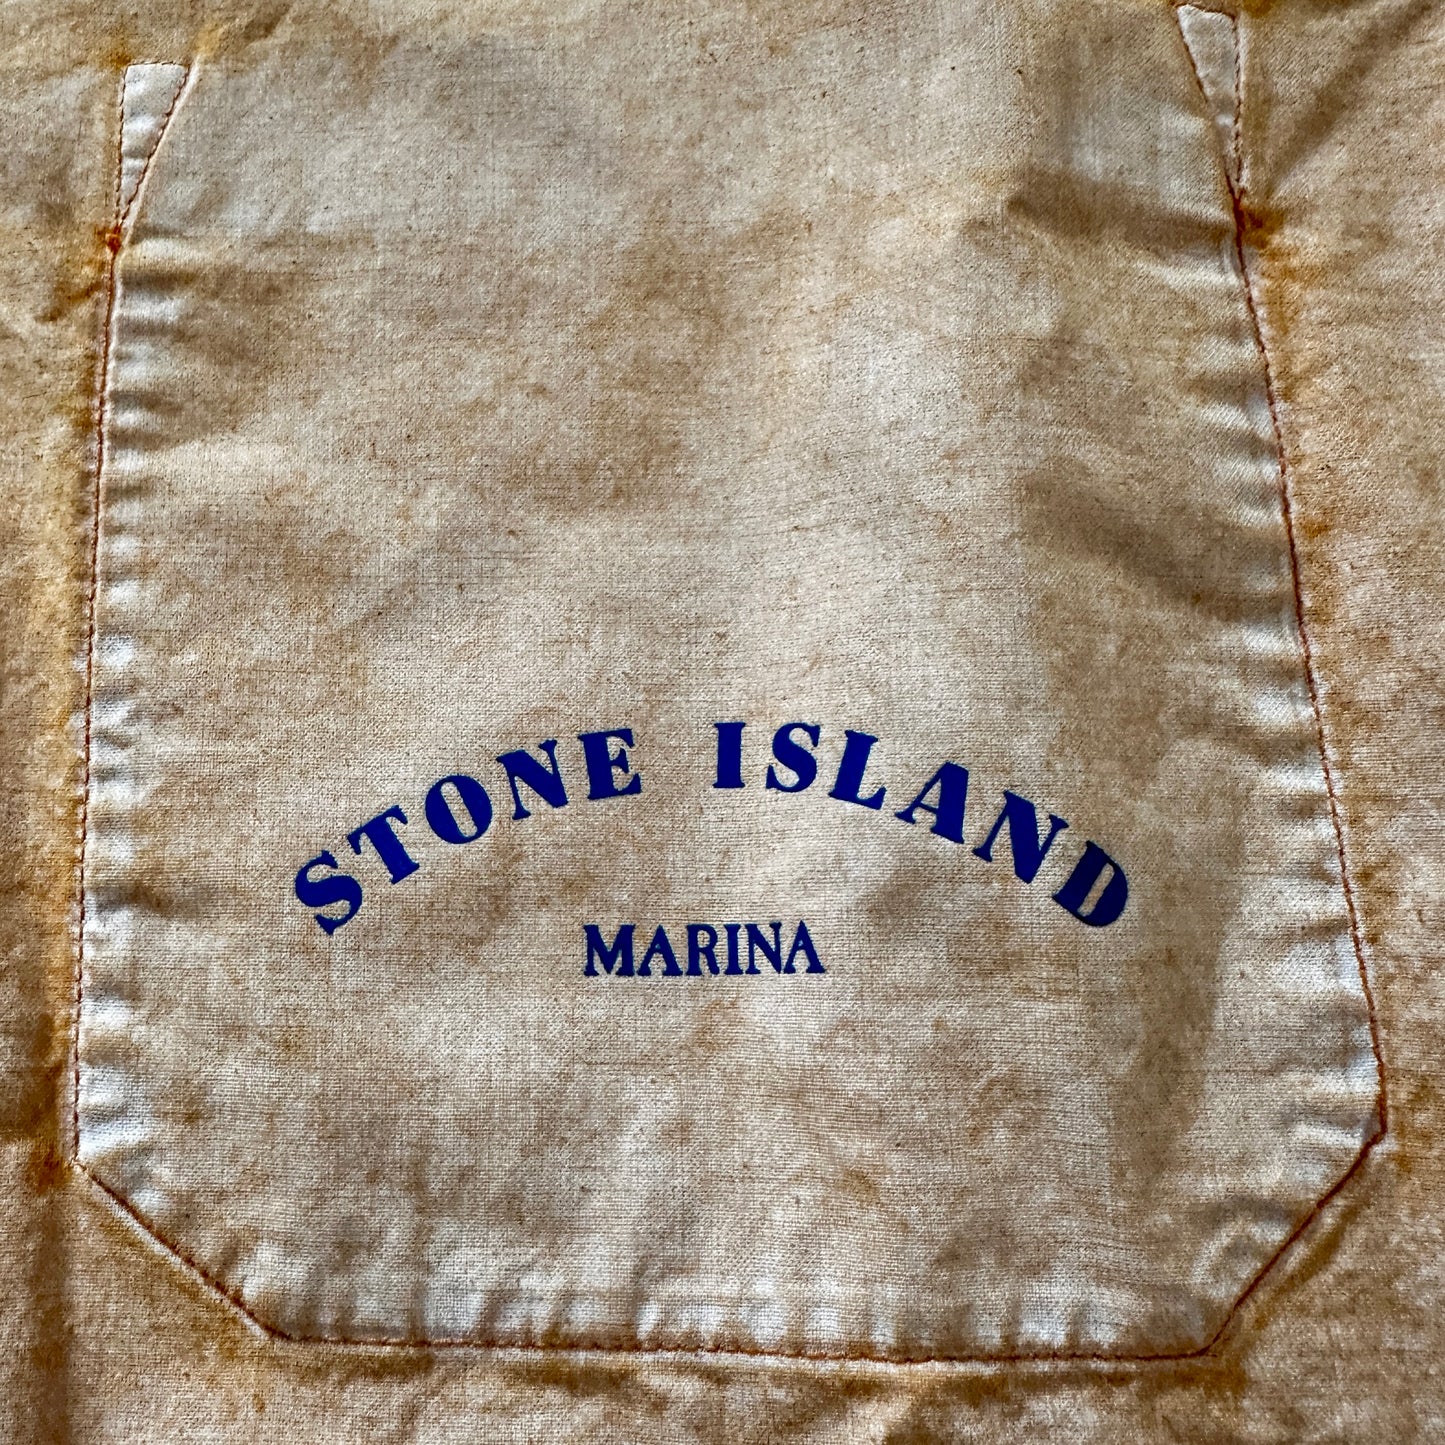 Stone Island Marina 2023 Reflective Print Overshirt Polo Orange - L - Made in Italy